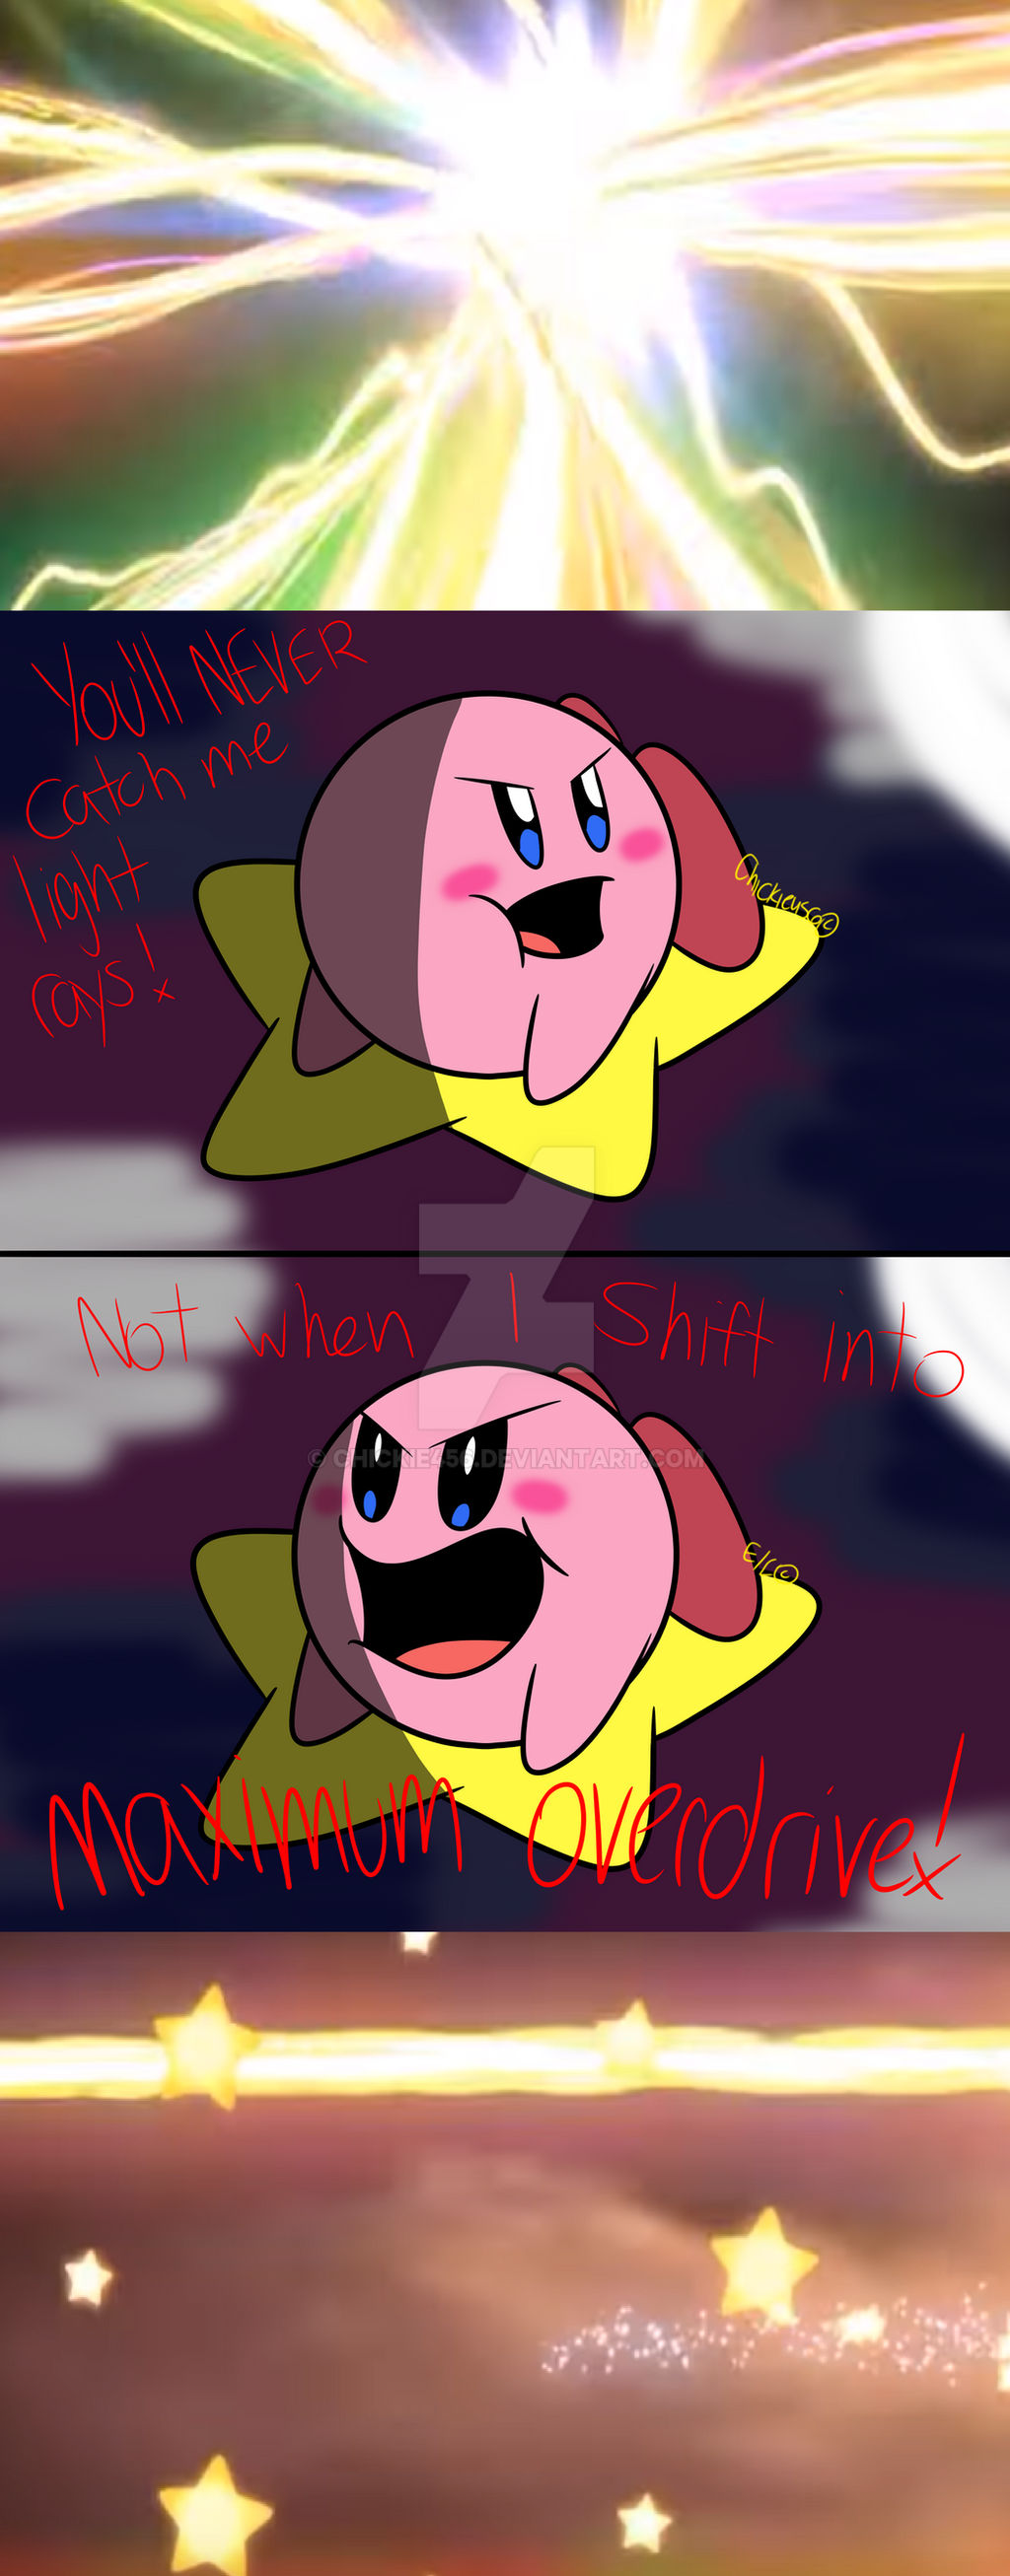 Kirby's maximum overdrive!